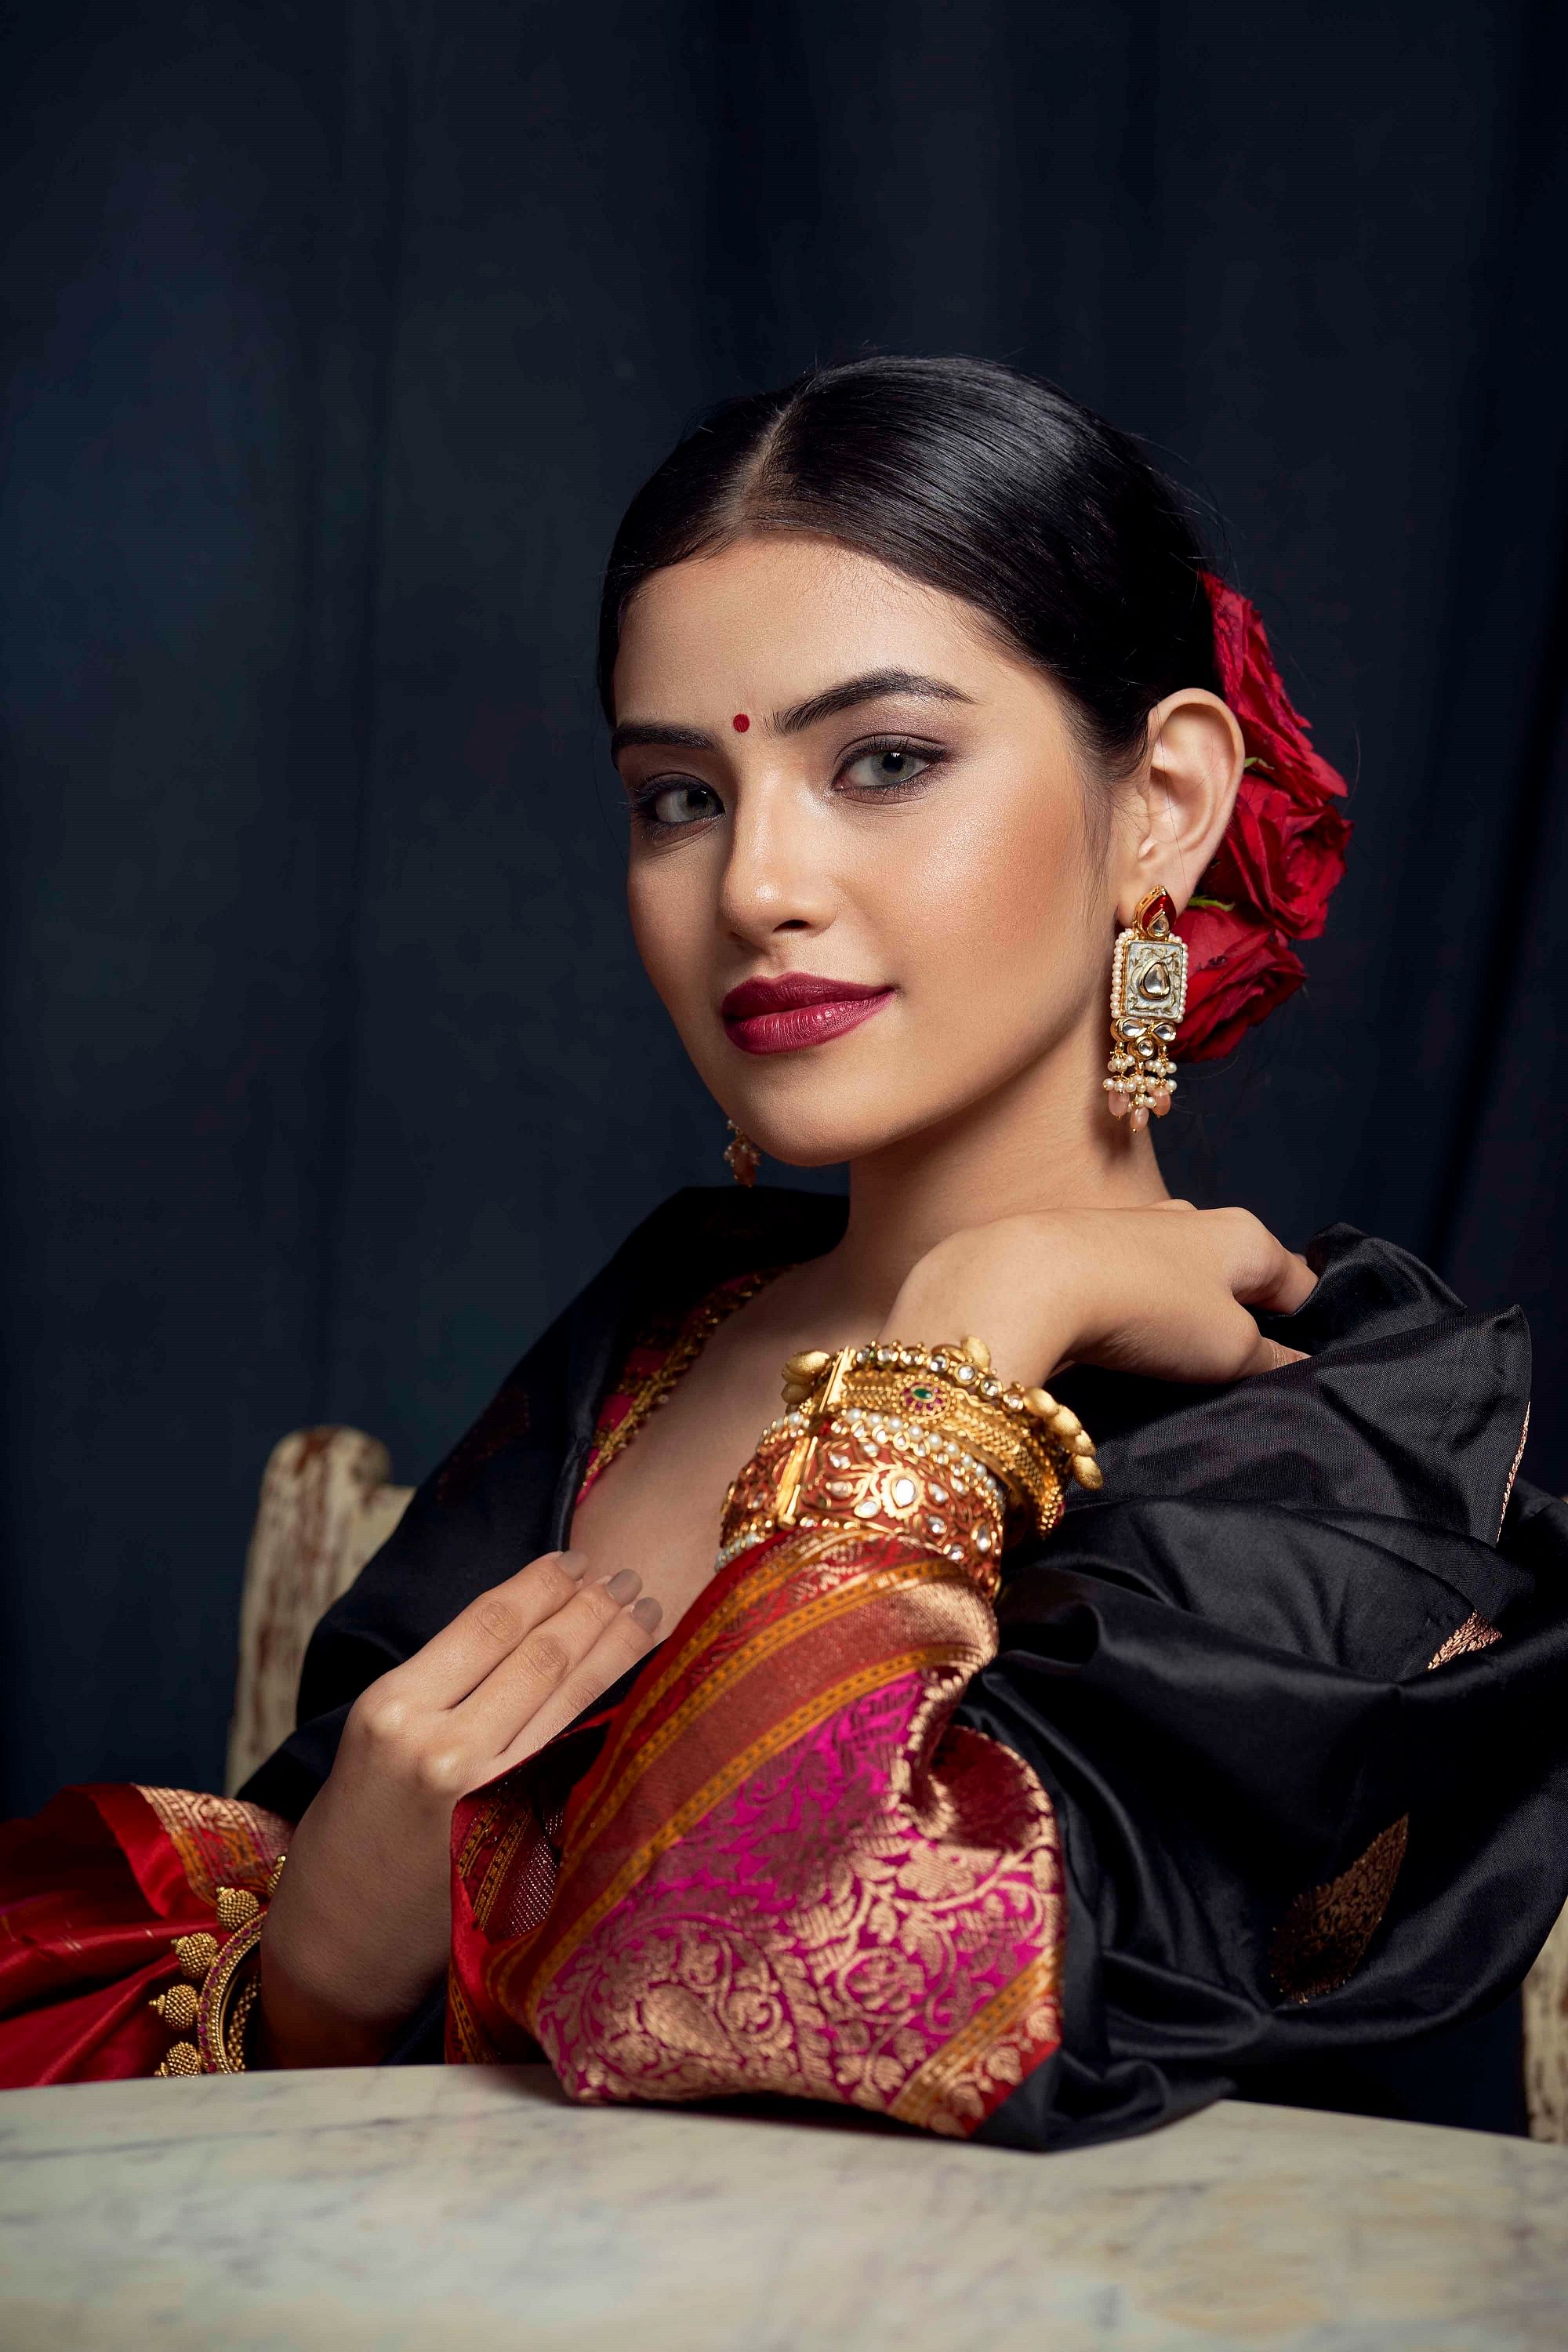 Buy Fasherati Gypsy Tibetan Silver Blue Stone Gourd Shape Drop Earrings For  Women Fashion Jewelry Gifts at Amazon.in